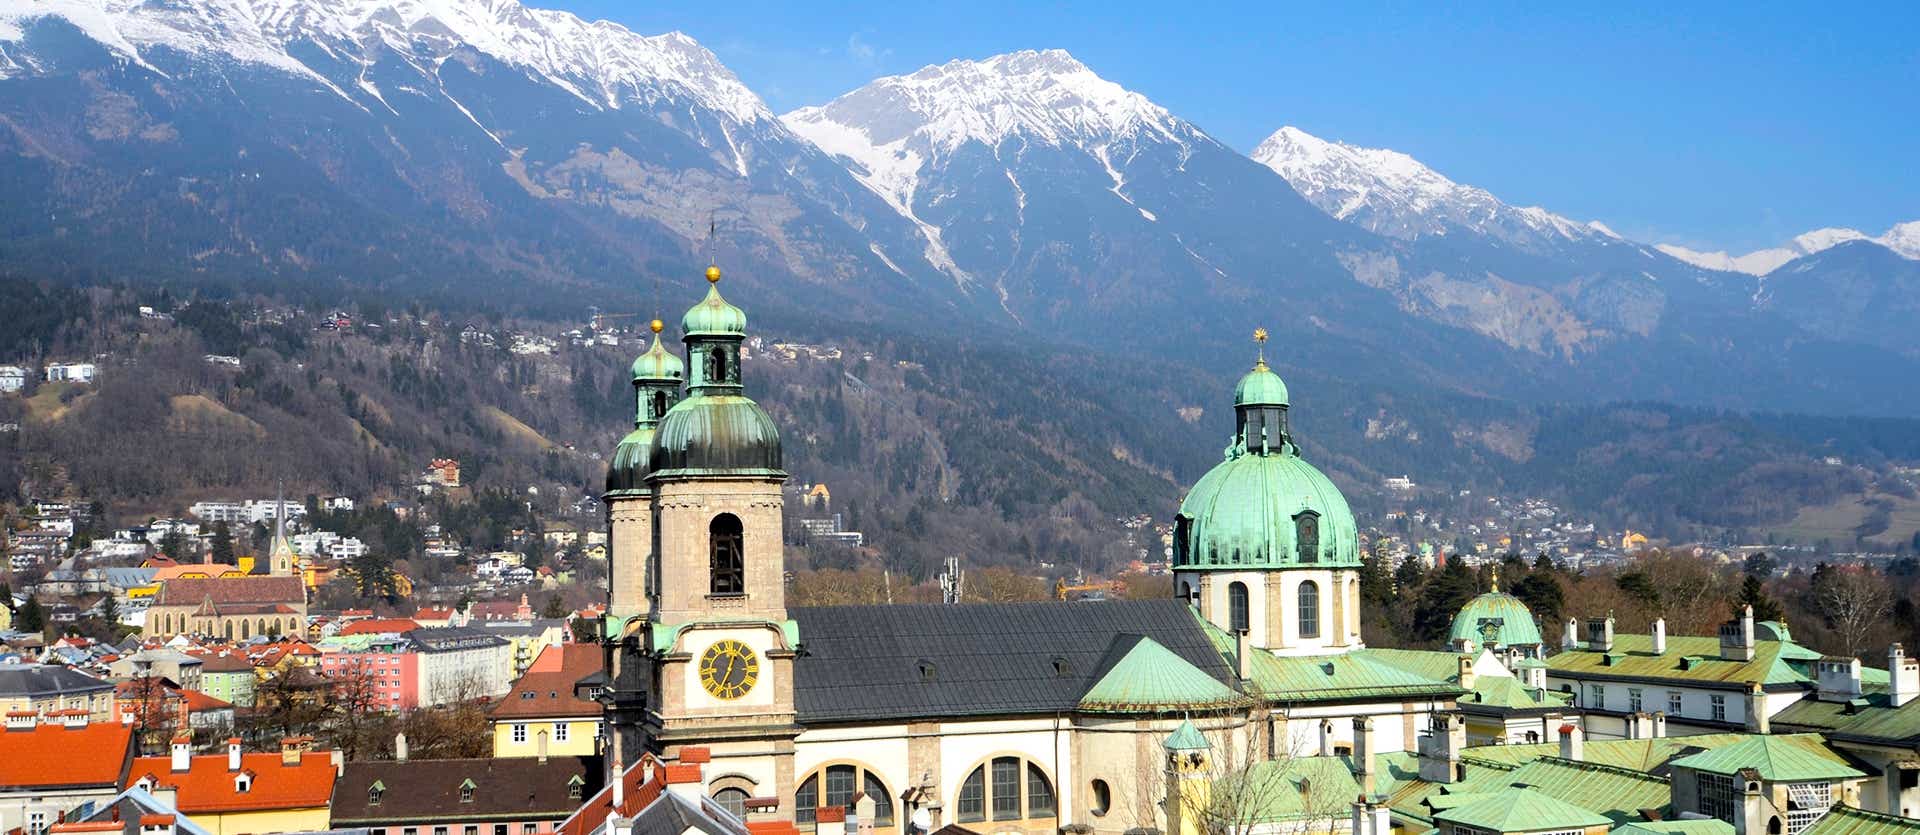 Saint Jakob Church <span class="iconos separador"></span> Innsbruck